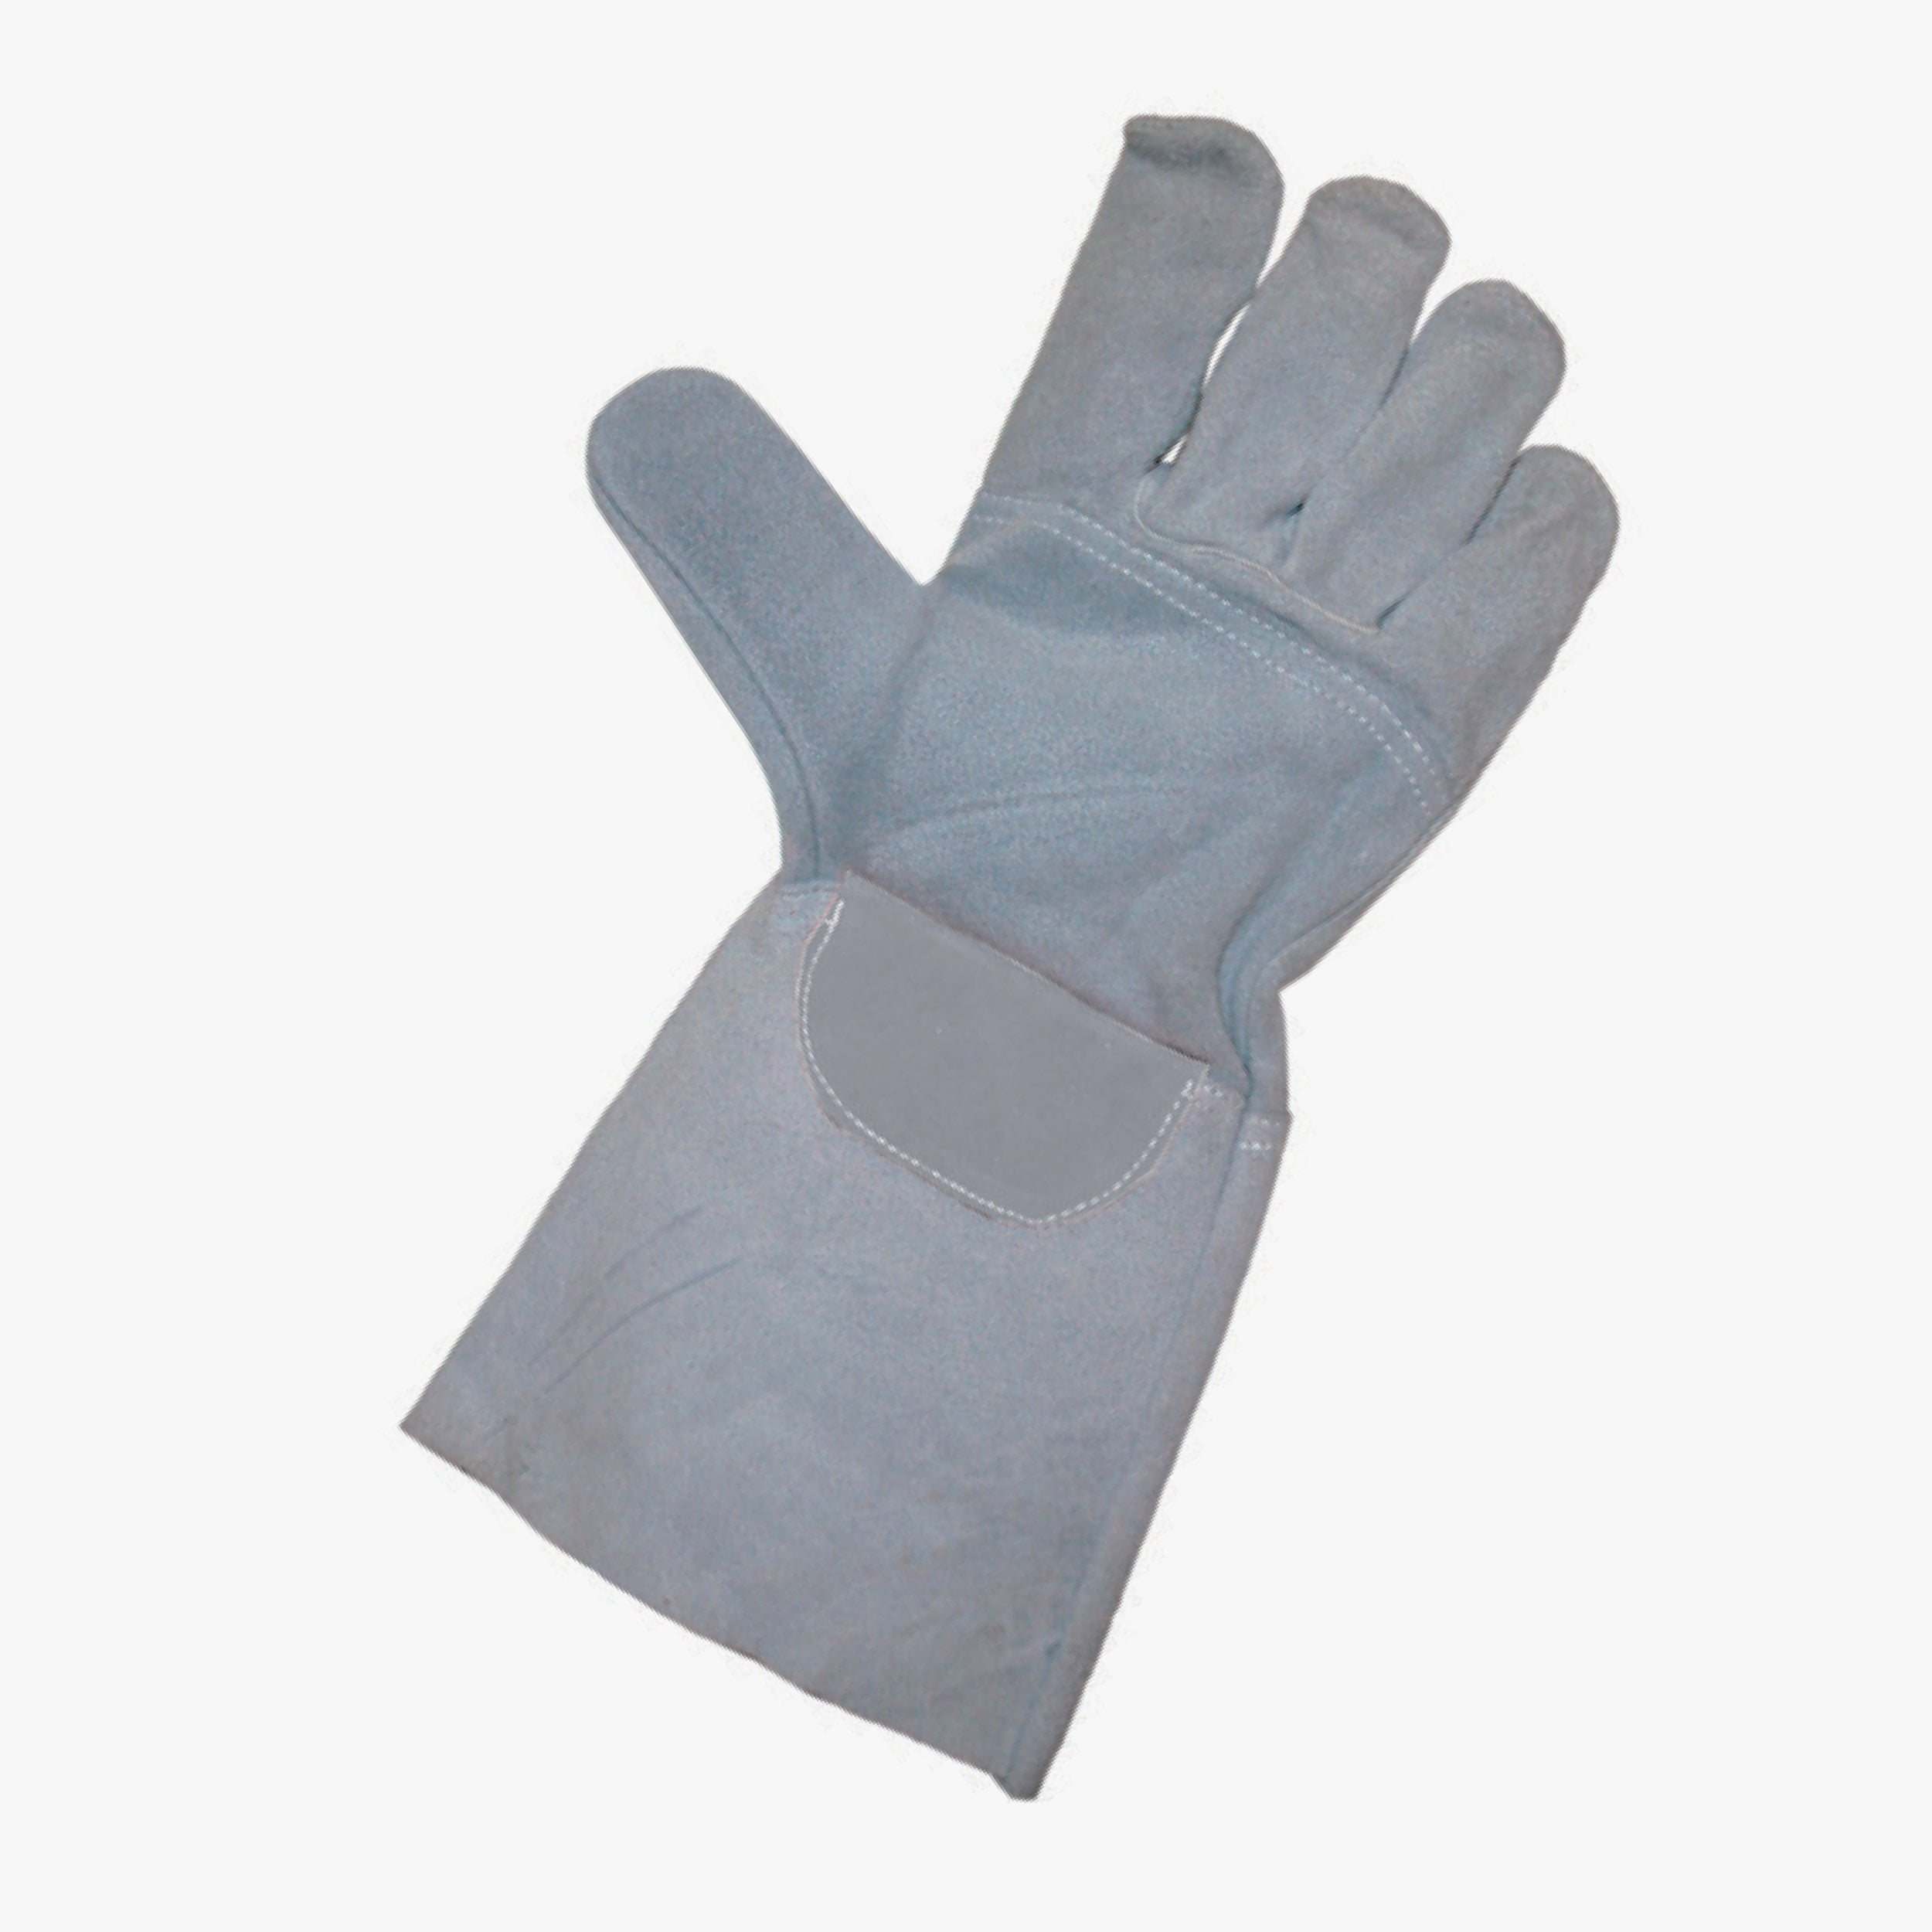 CROSTA REINFORCED Gloves CM 35 - 10pcs